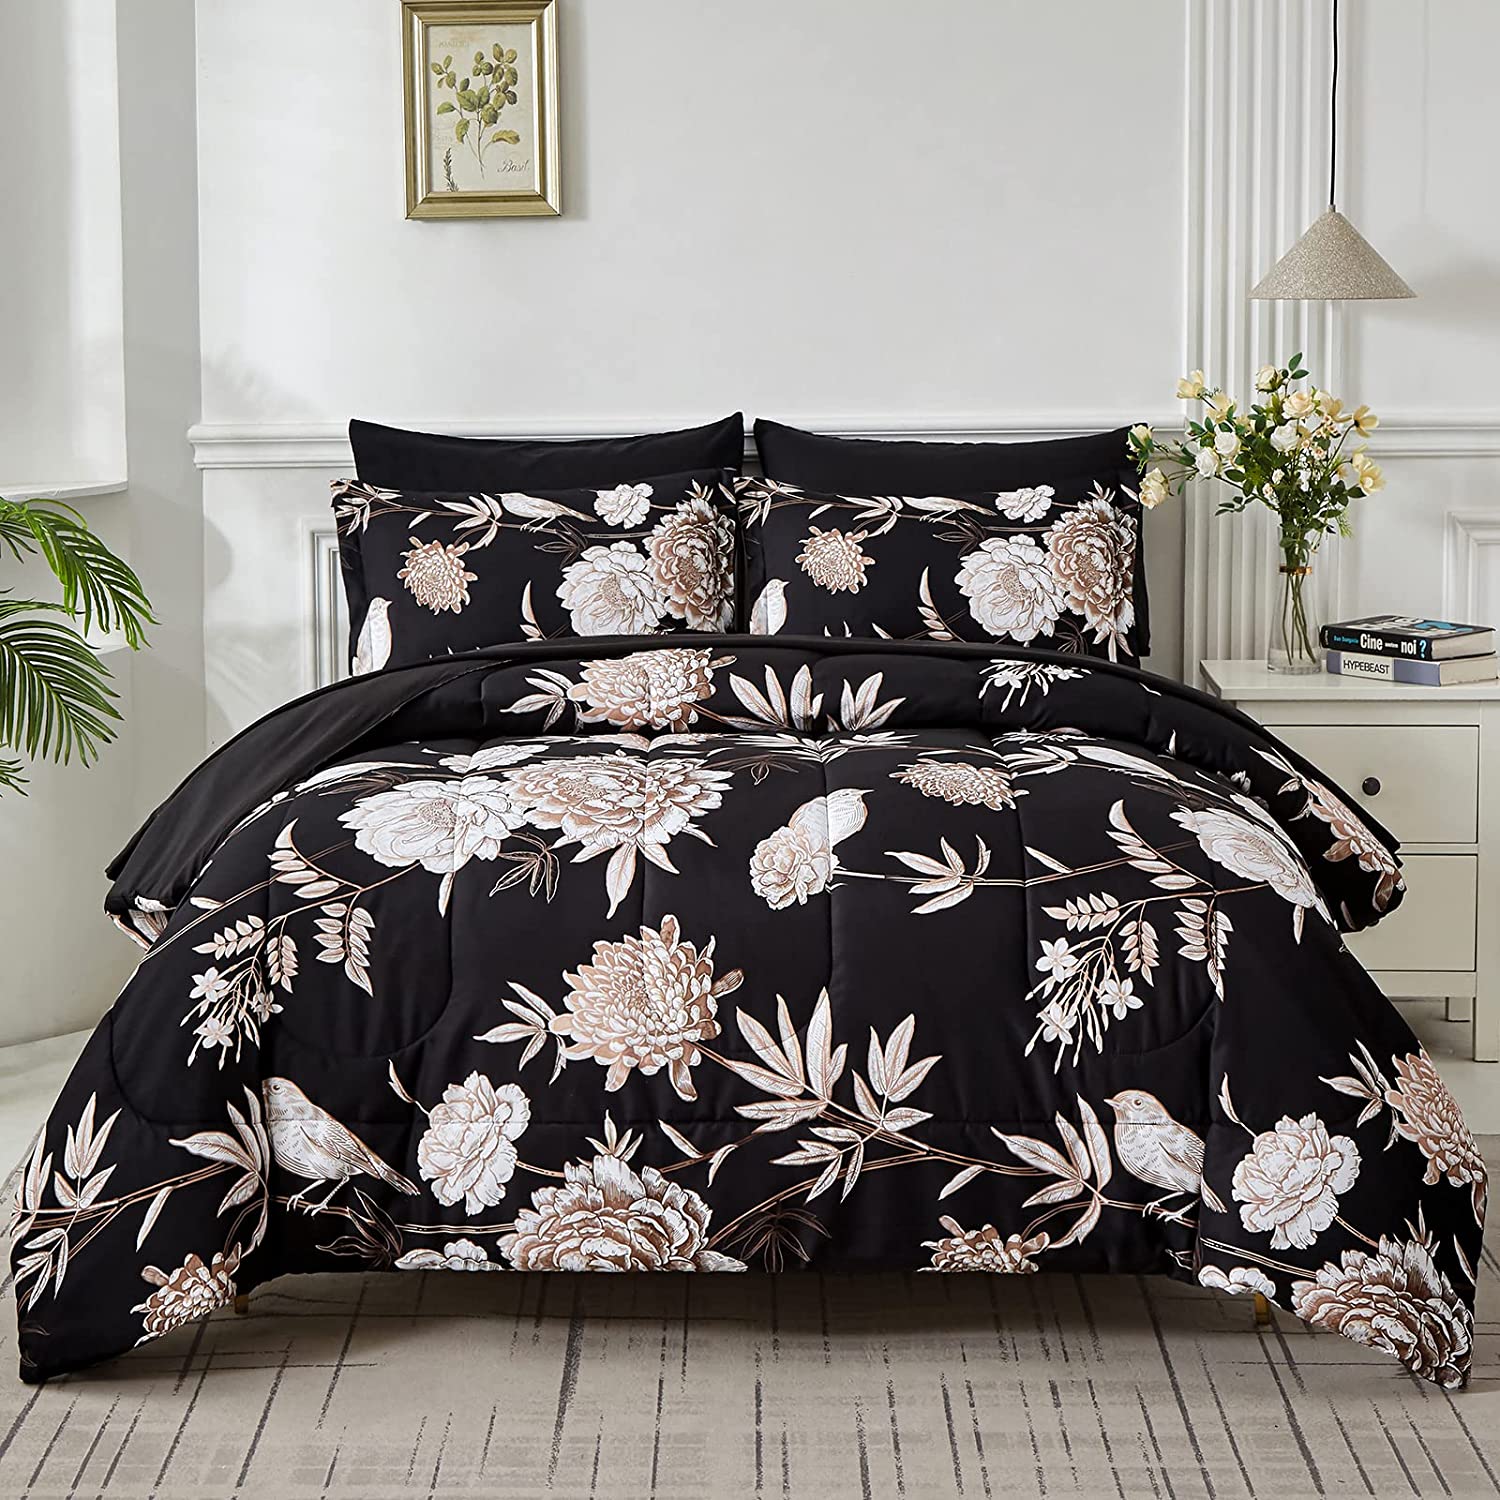 Yogeneg 7 Piece Bed in a Bag Queen Comforter Set Botanical Floral Bedding  Set,White Flowers Leaves Printed on Black Reversible Design,Soft Microfiber